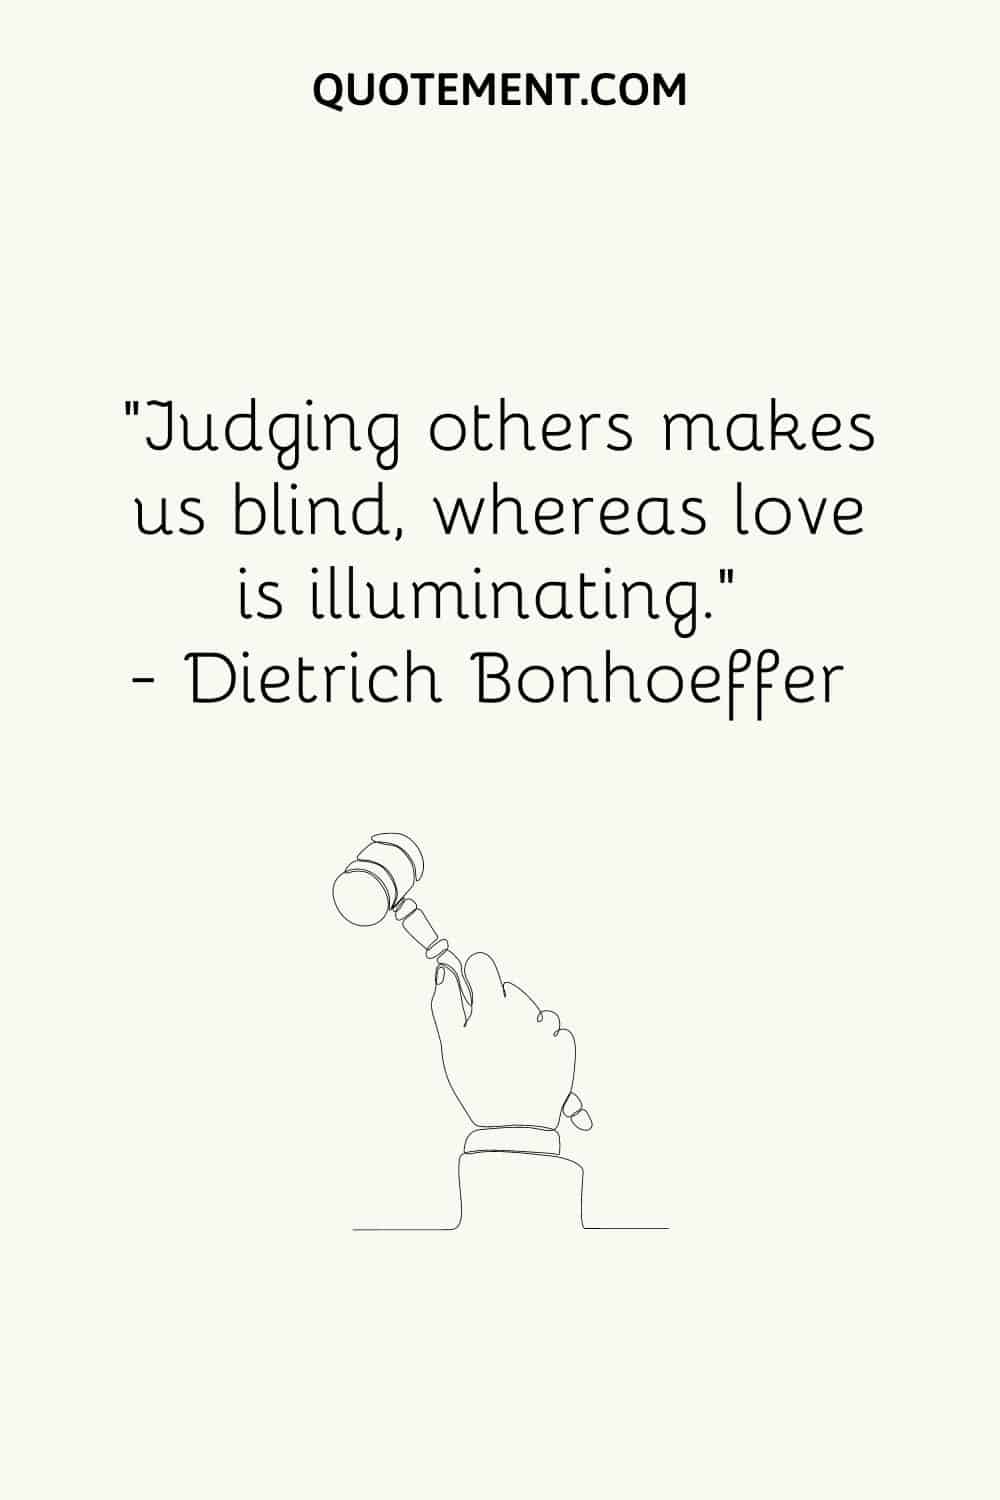 “Judging others makes us blind, whereas love is illuminating.” — Dietrich Bonhoeffer